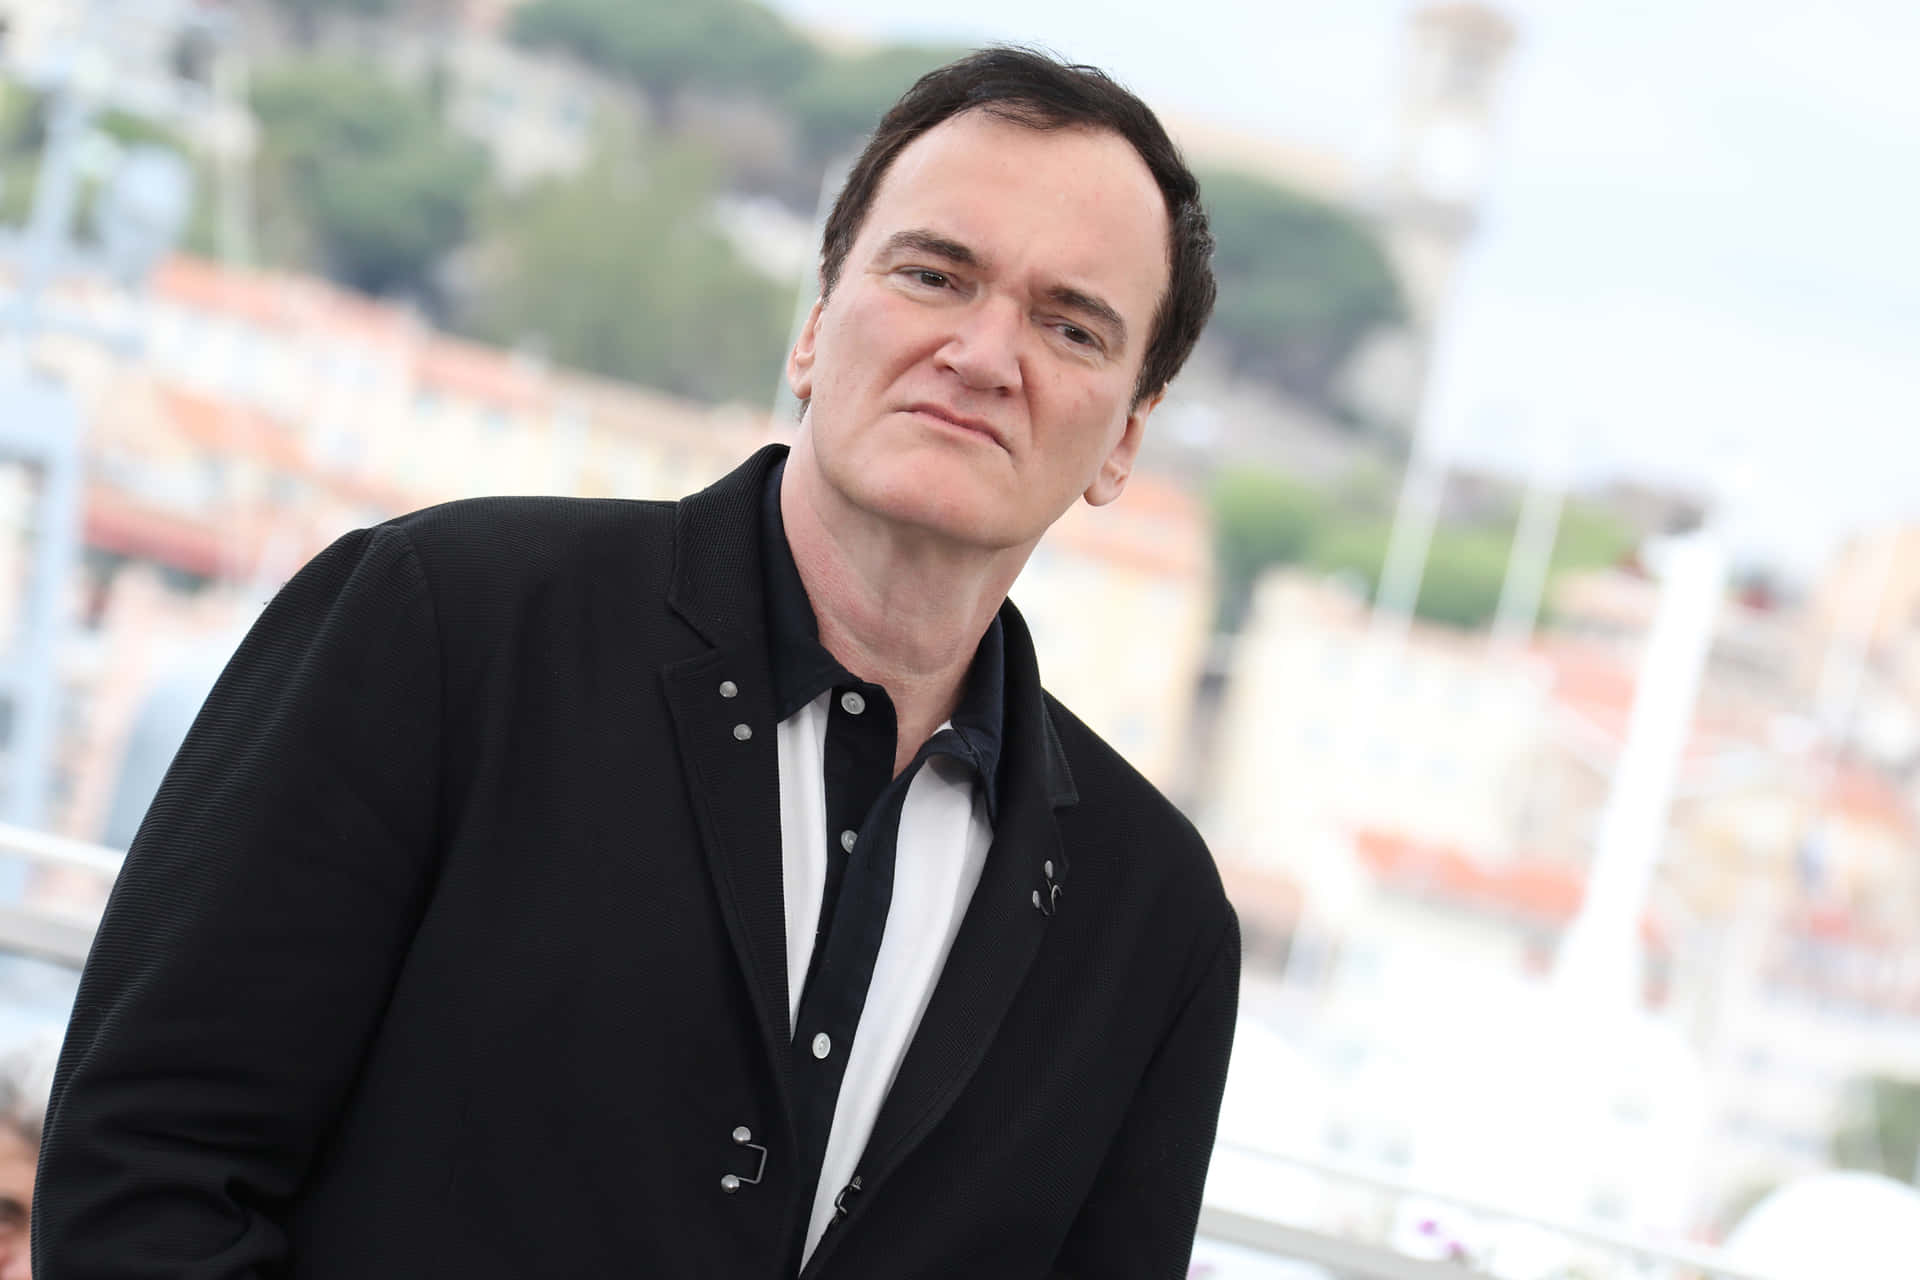 Quentin Tarantino Portrait Background